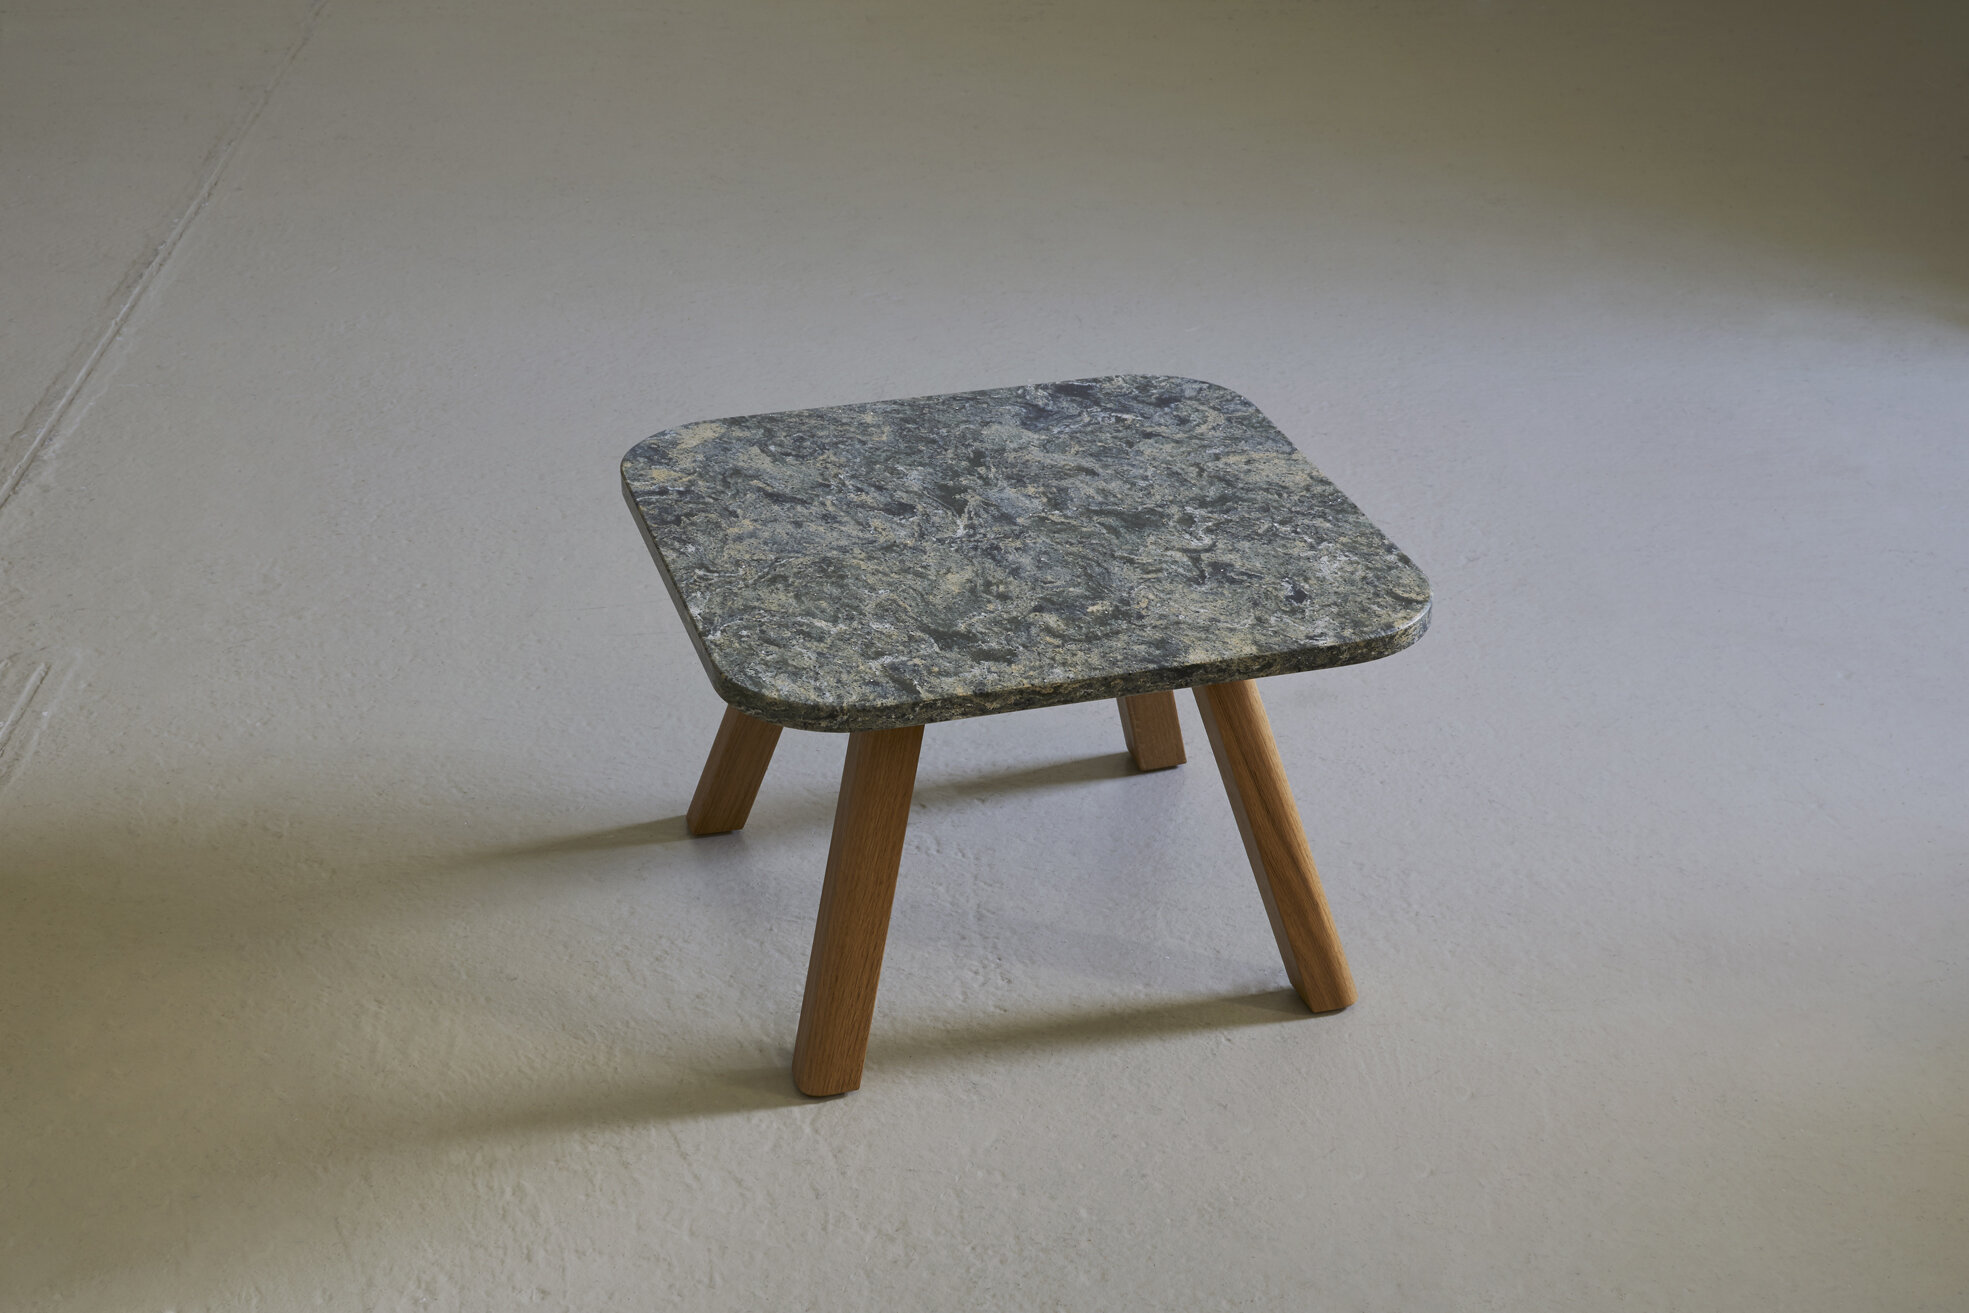 hm10y3 Wentwood quartz table (1) (low res).jpg